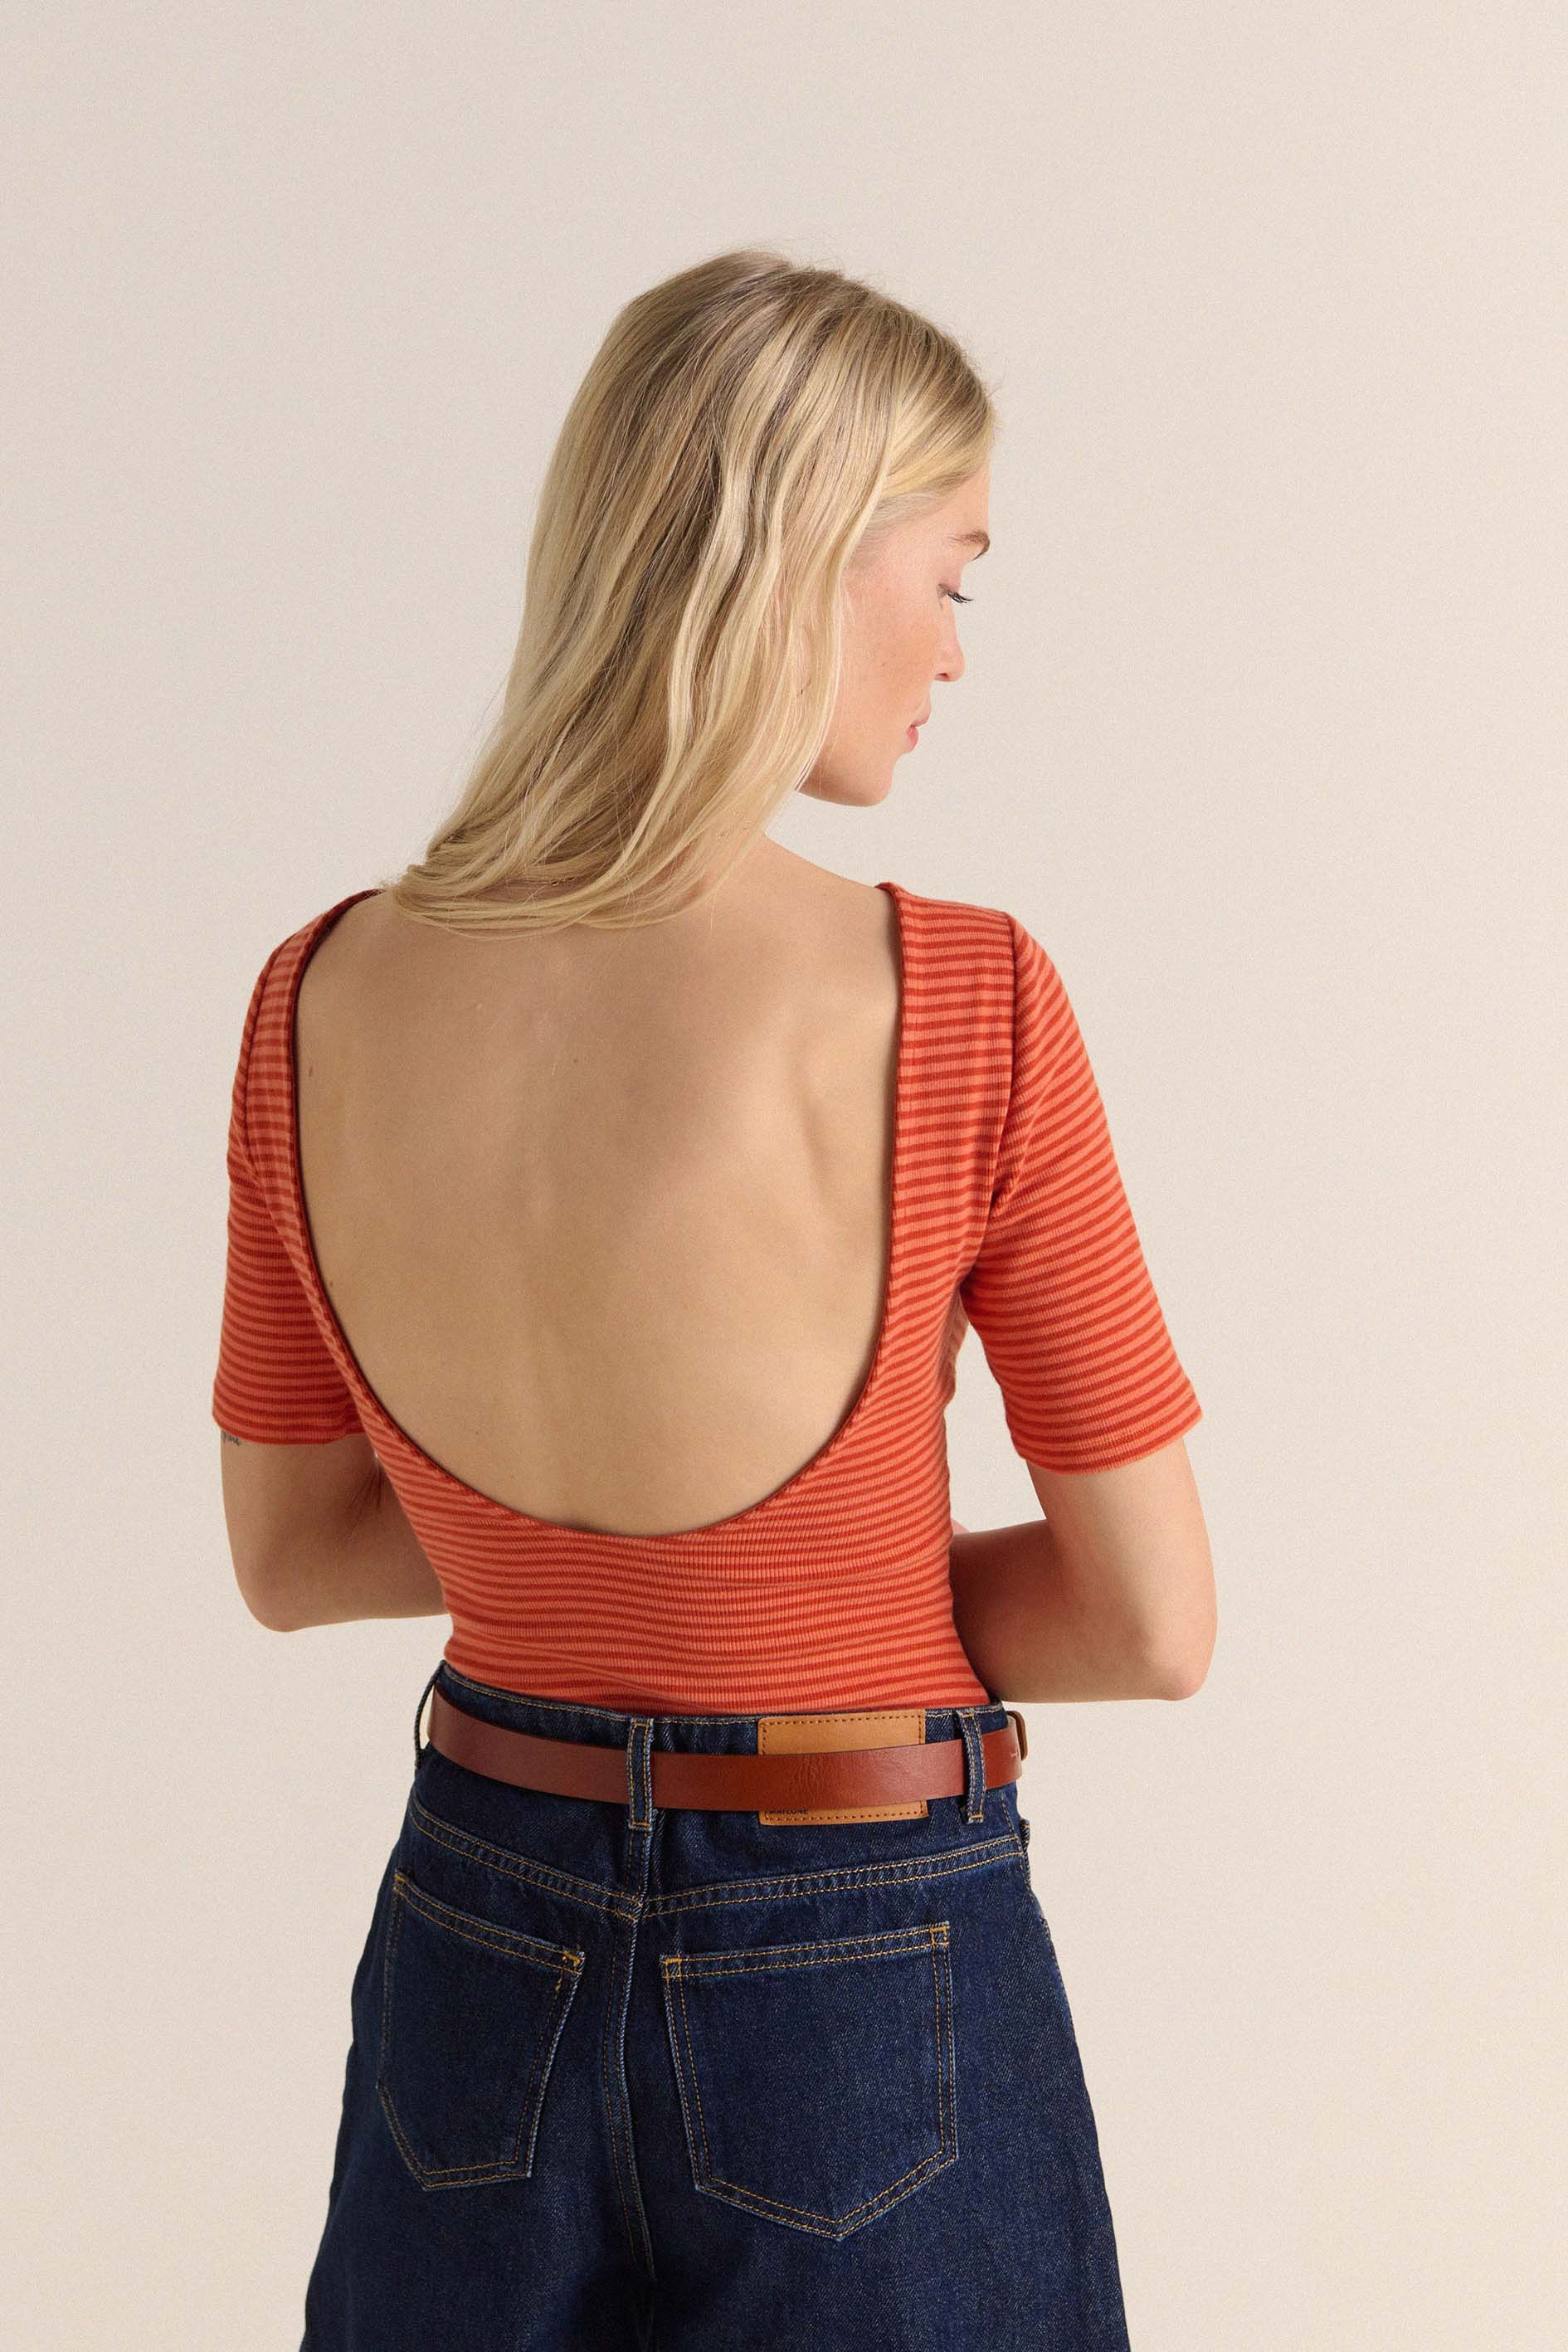 Bodysuit Happy red and orange stripes